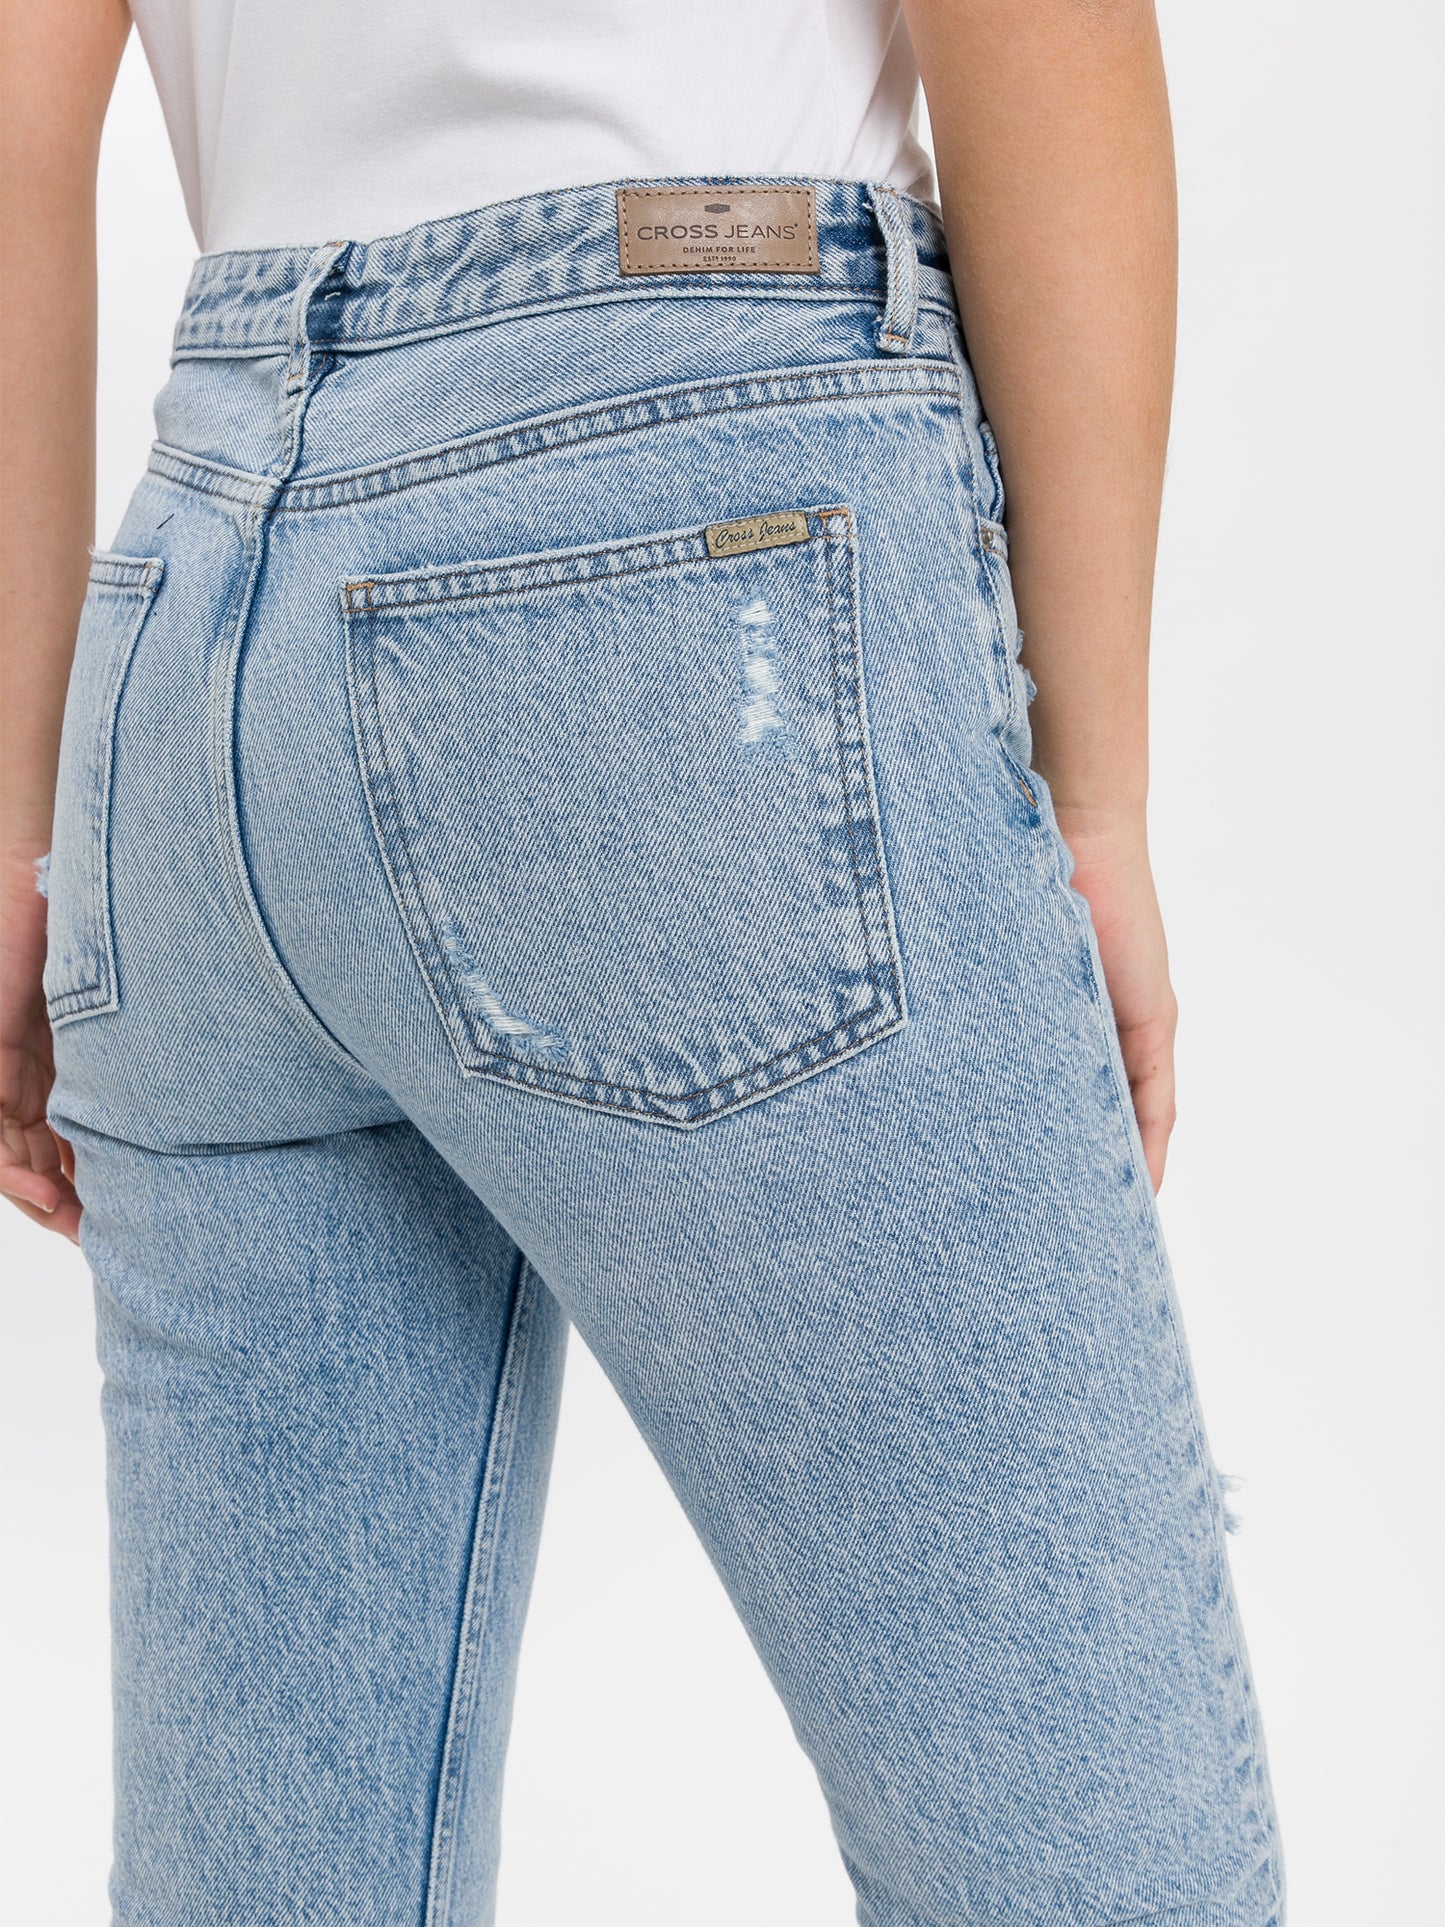 Marisa Damen Jeans Regular Fit High Waist Straight Leg hellblau